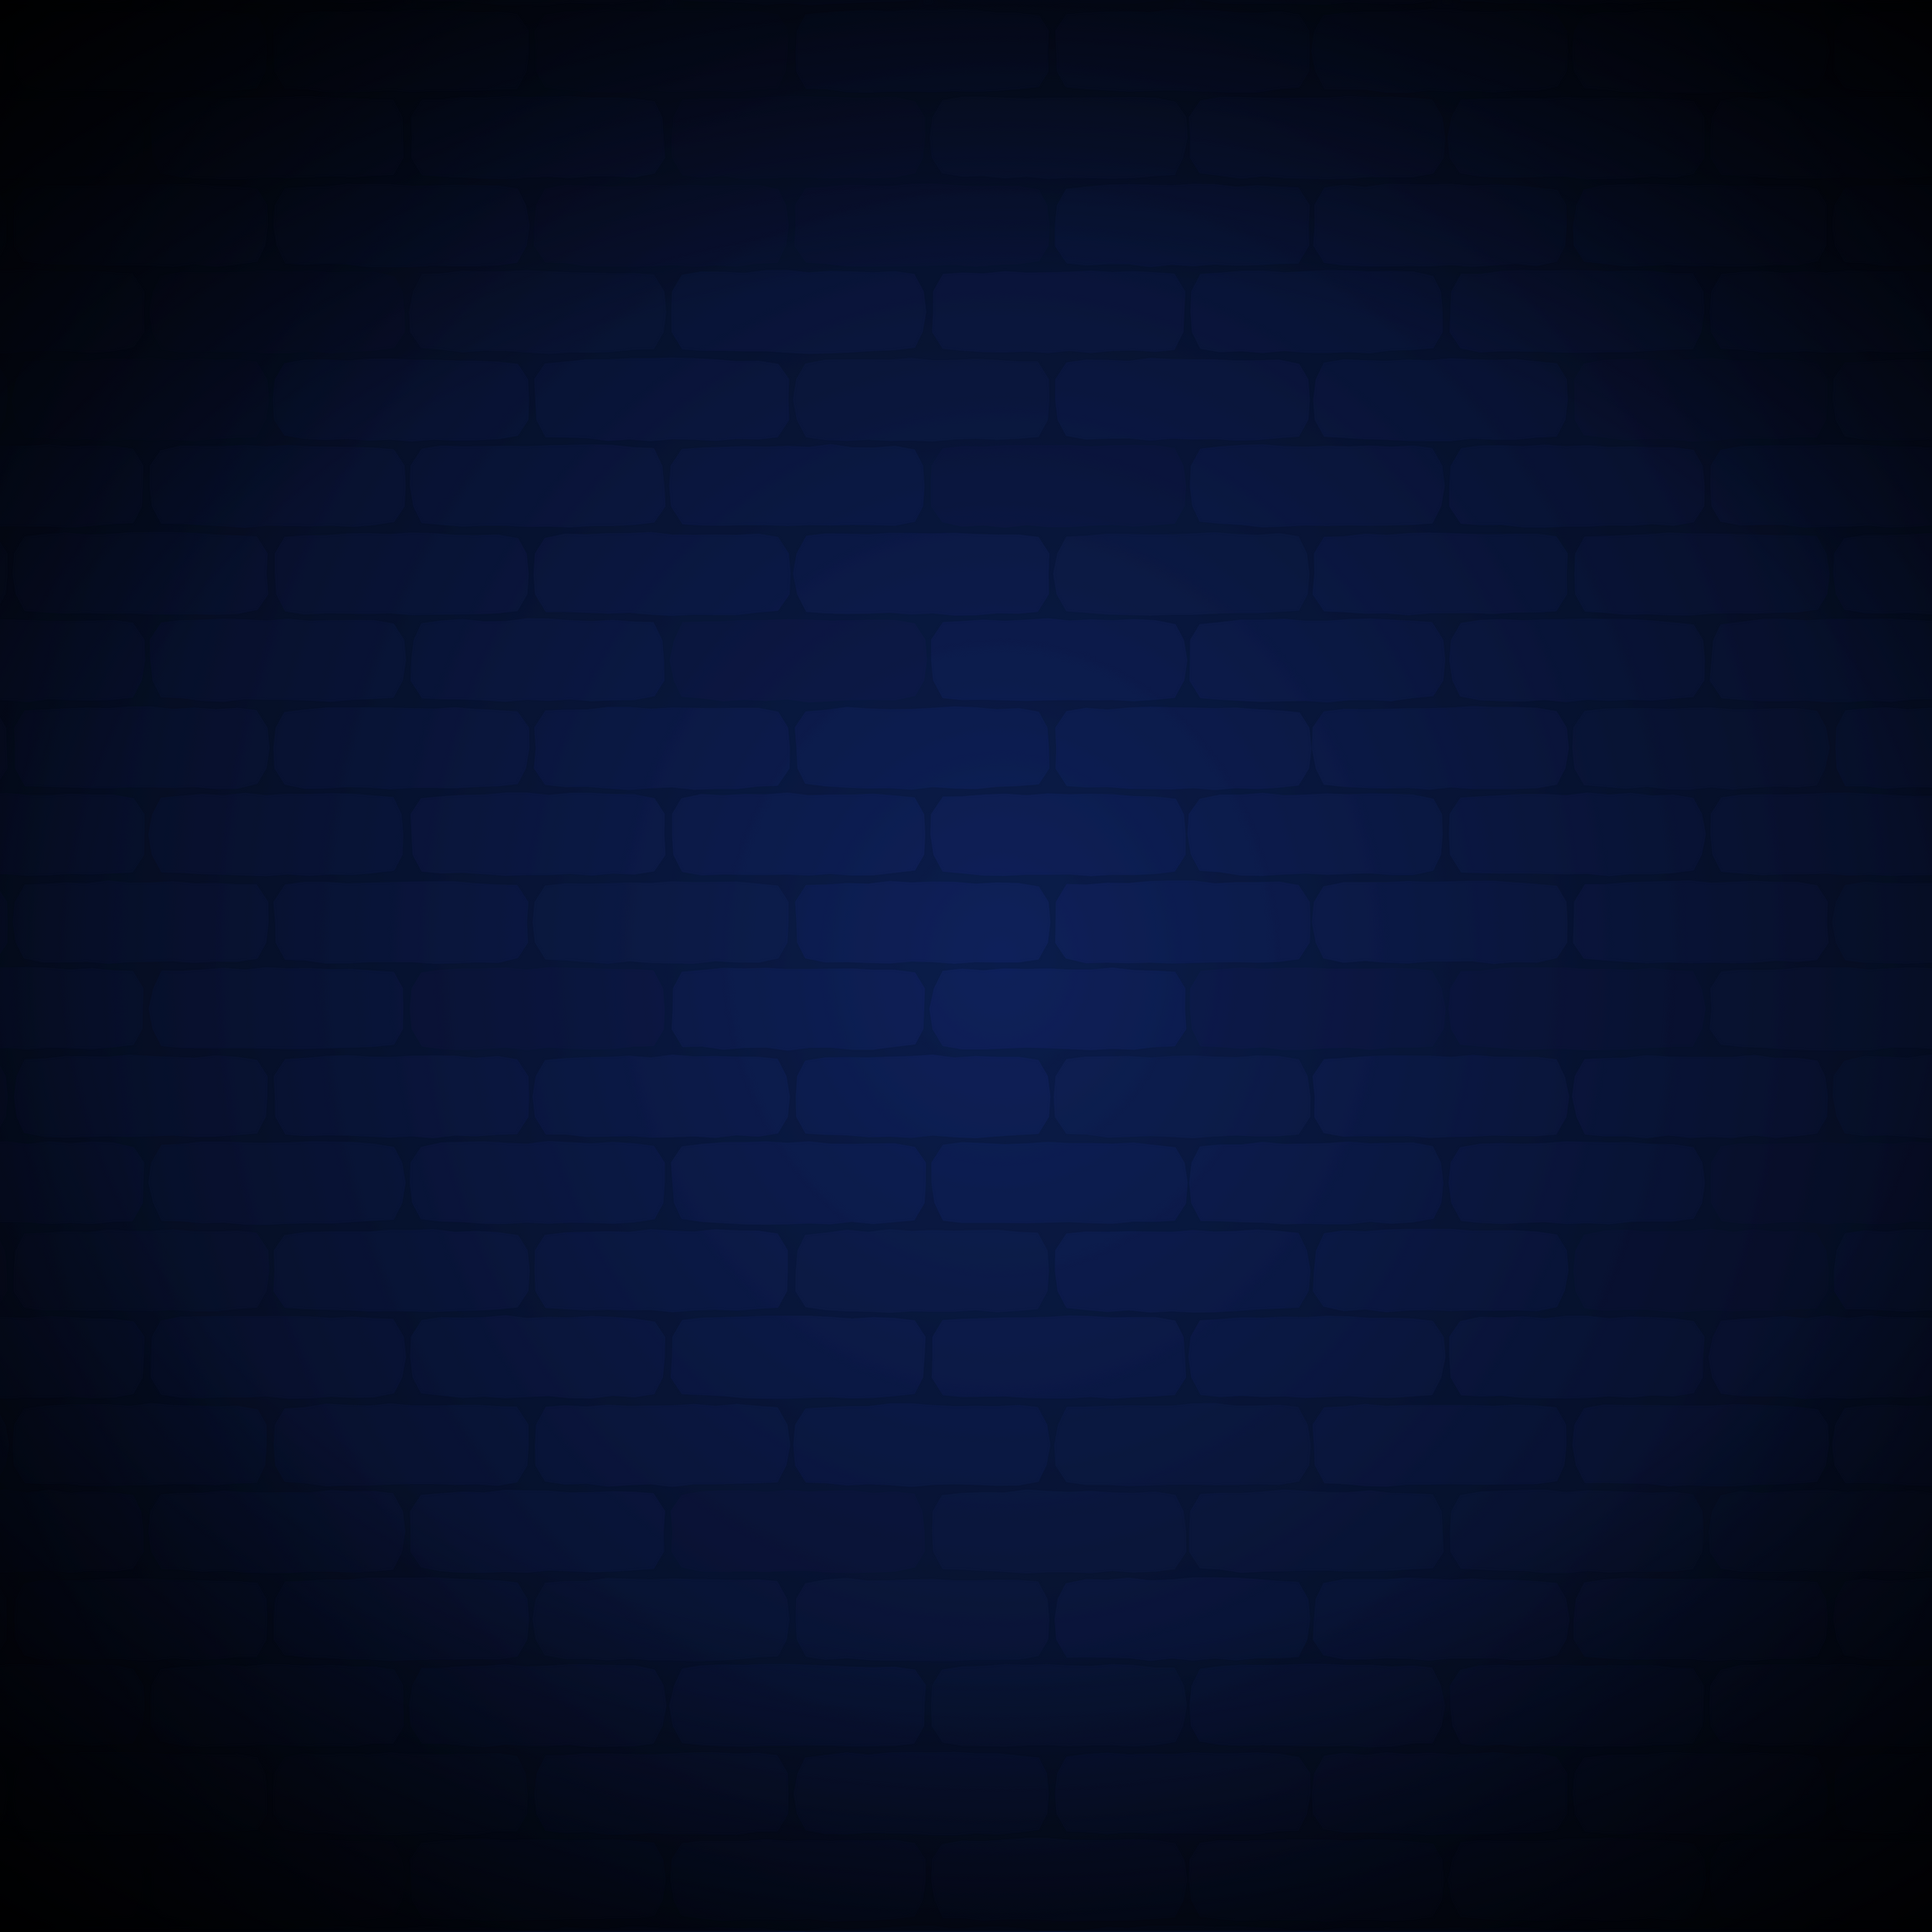 Square Background Brick Wall Neon Blue